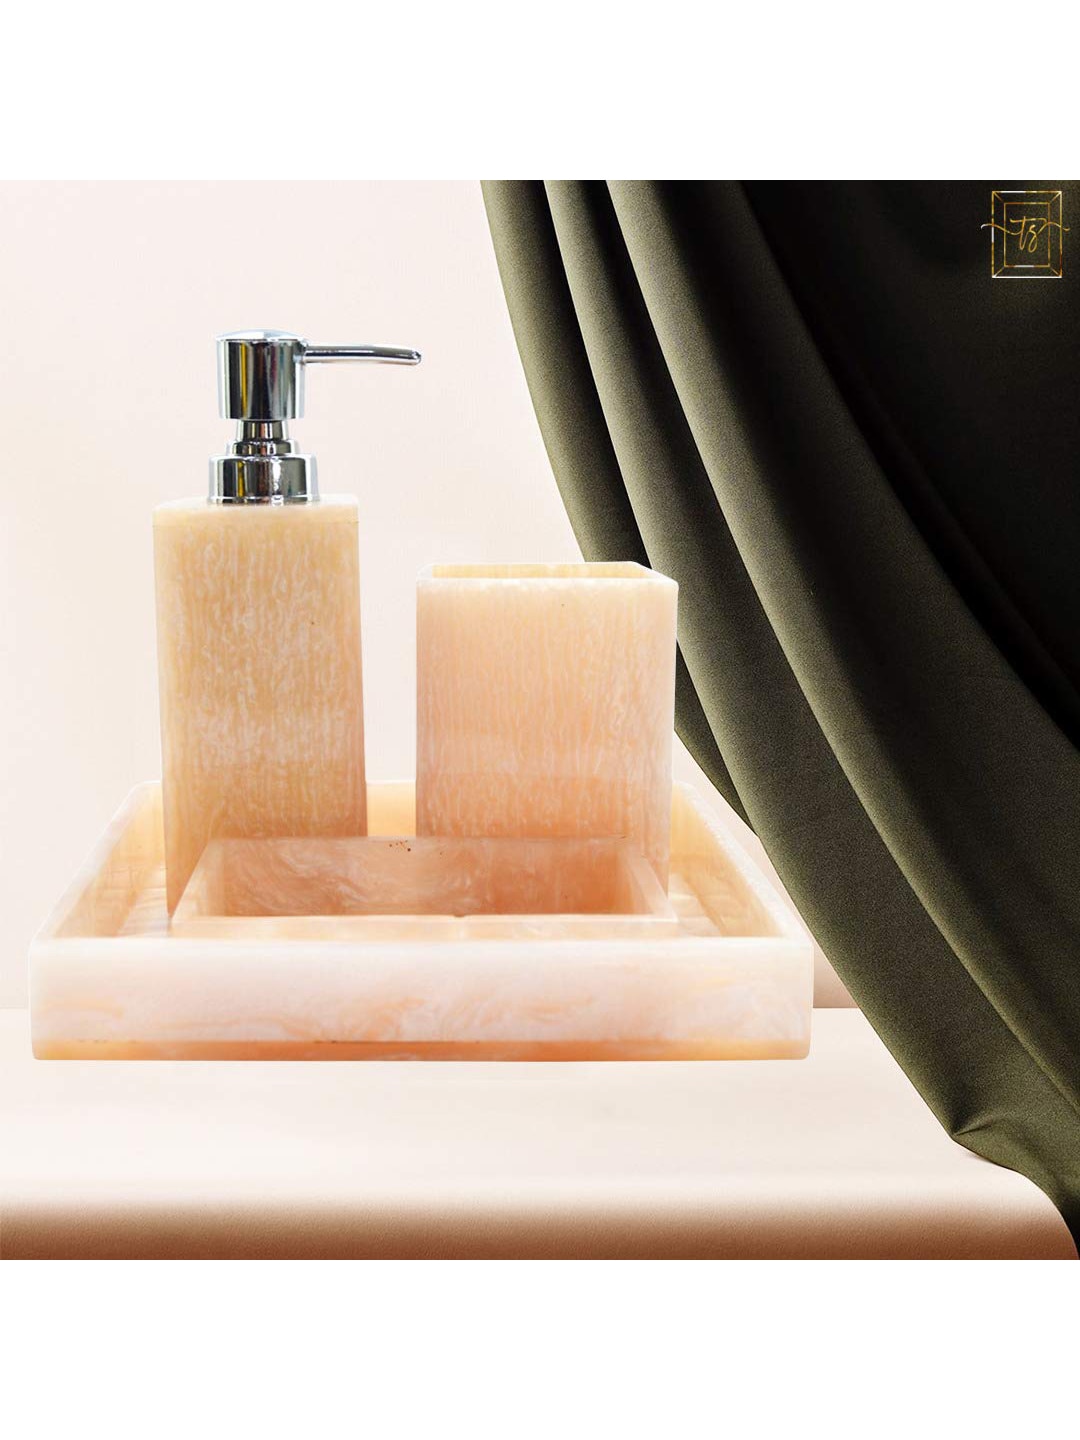 Tranquil square Set Of 4 Cream-Coloured Textured Resin Bathroom Accessories Price in India